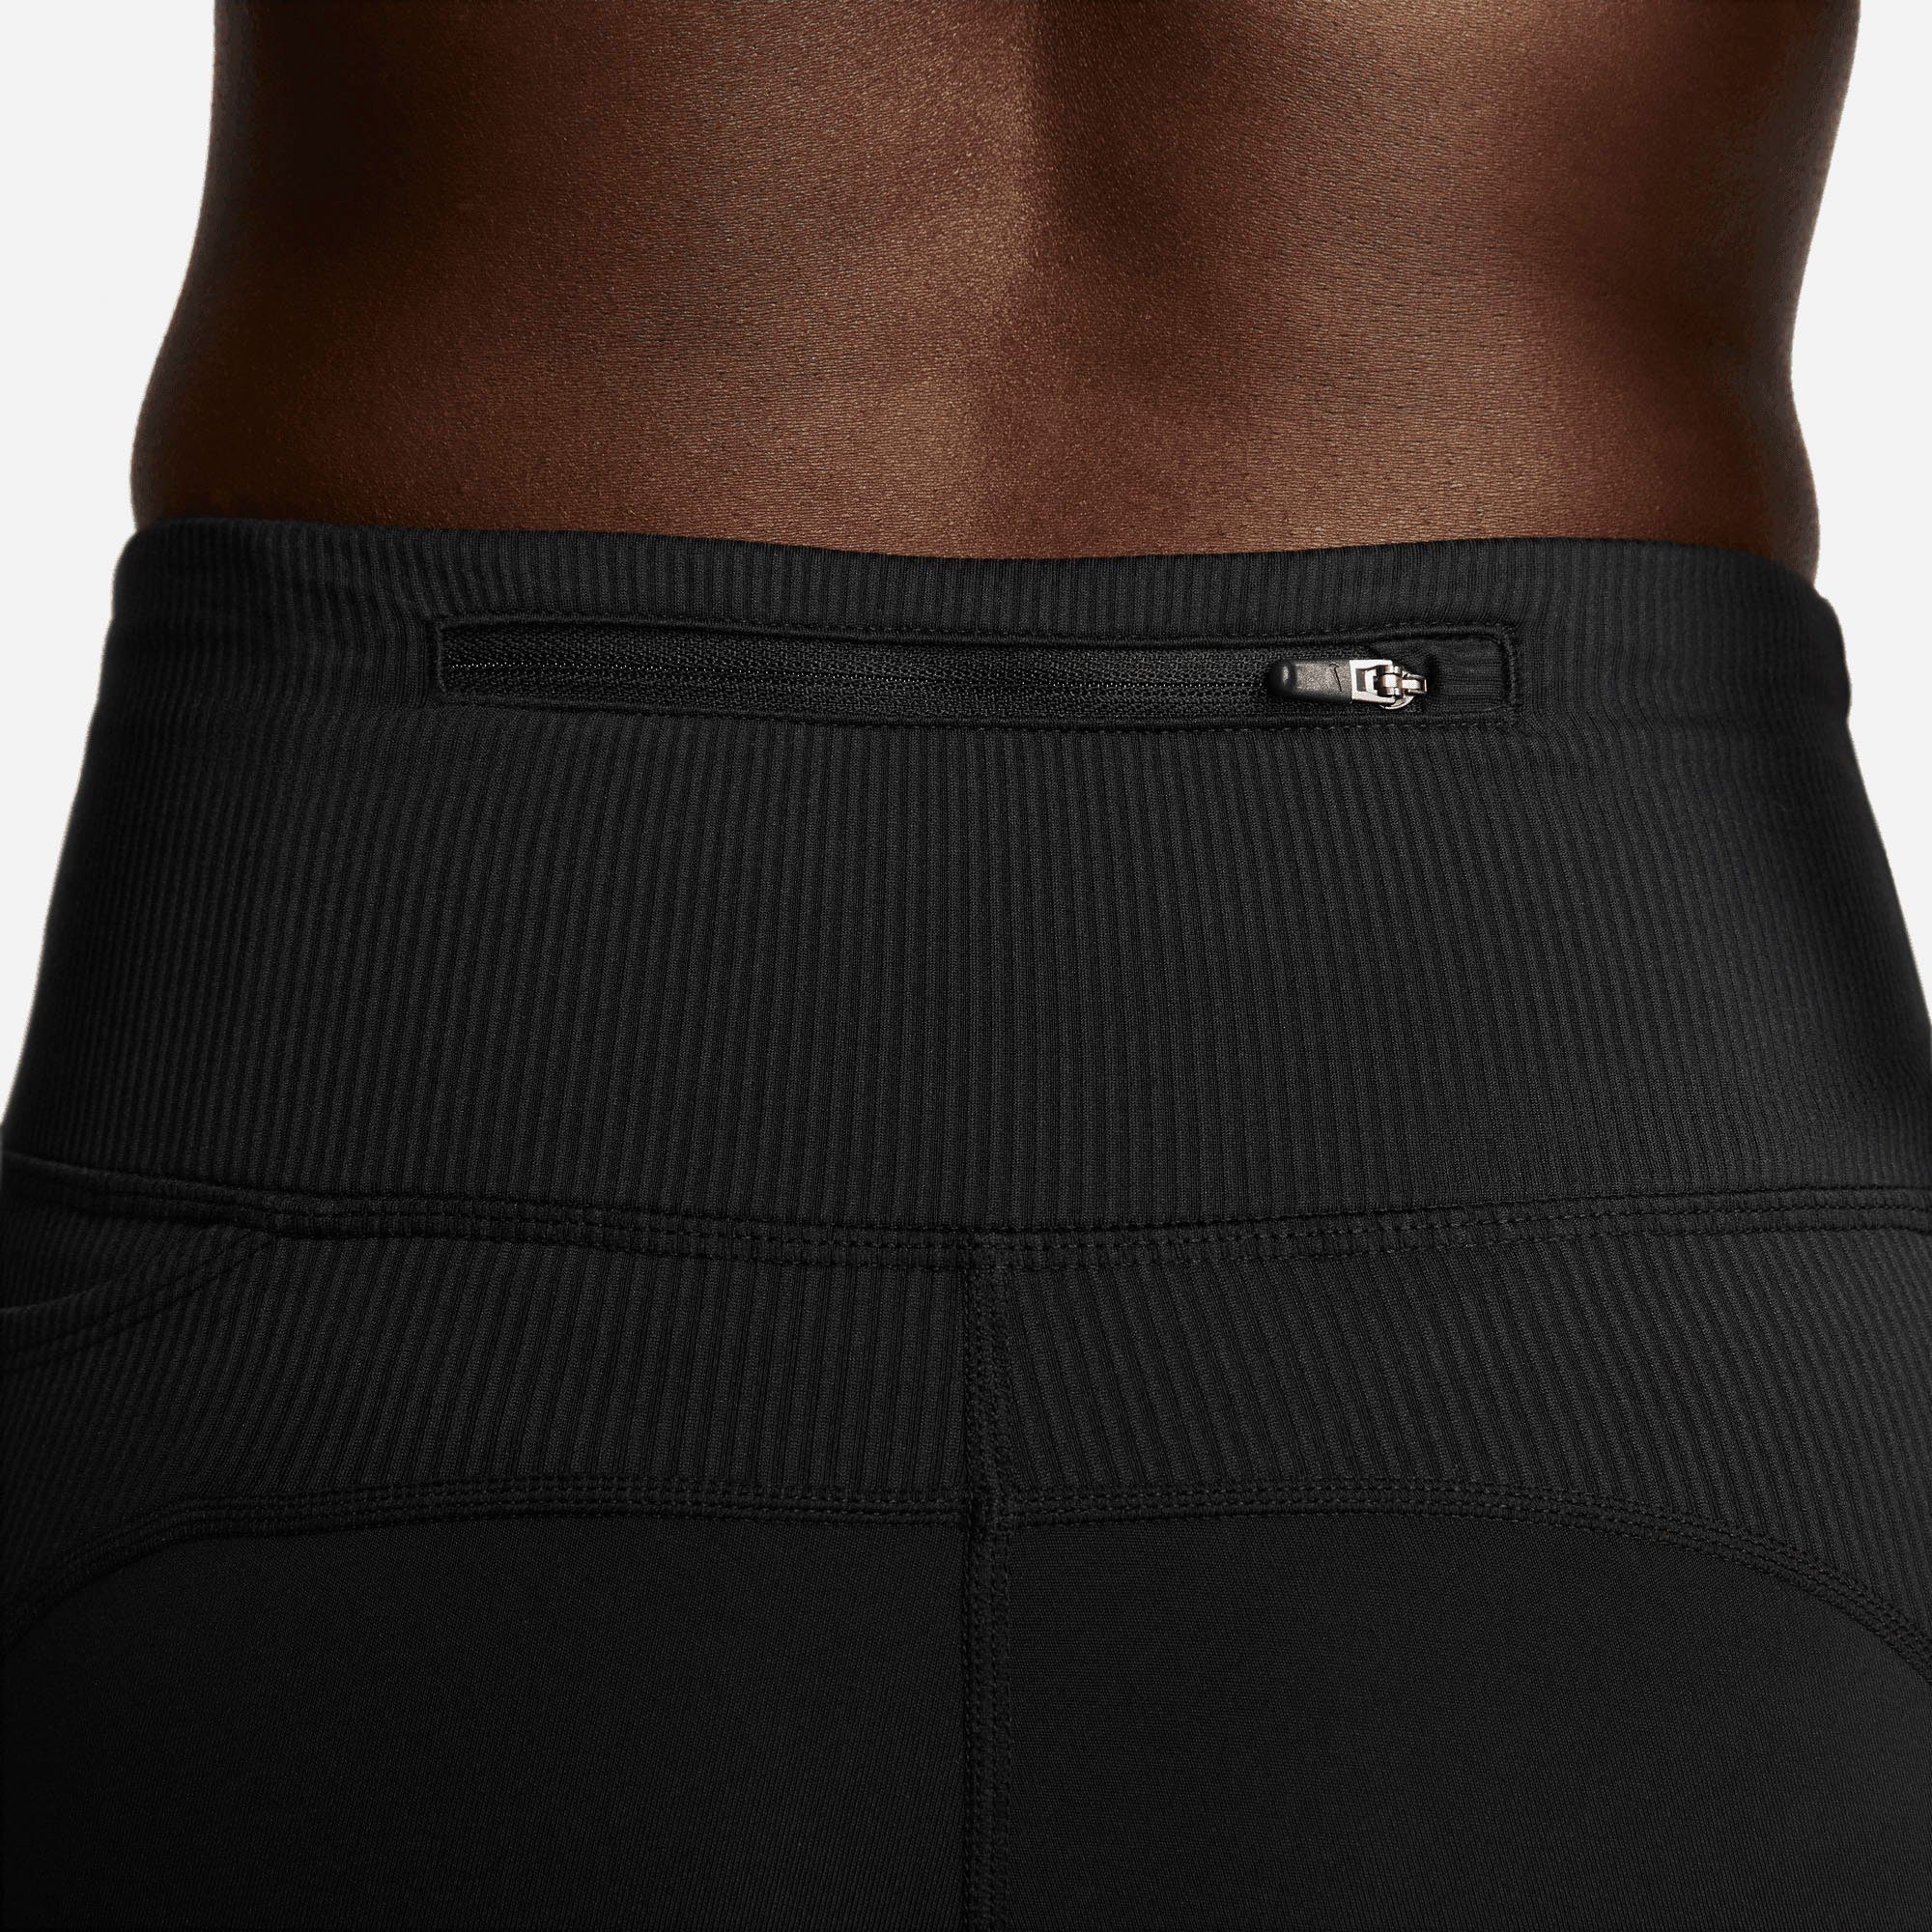 Nike Lauftights Dri-FIT Women's Shorts schwarz